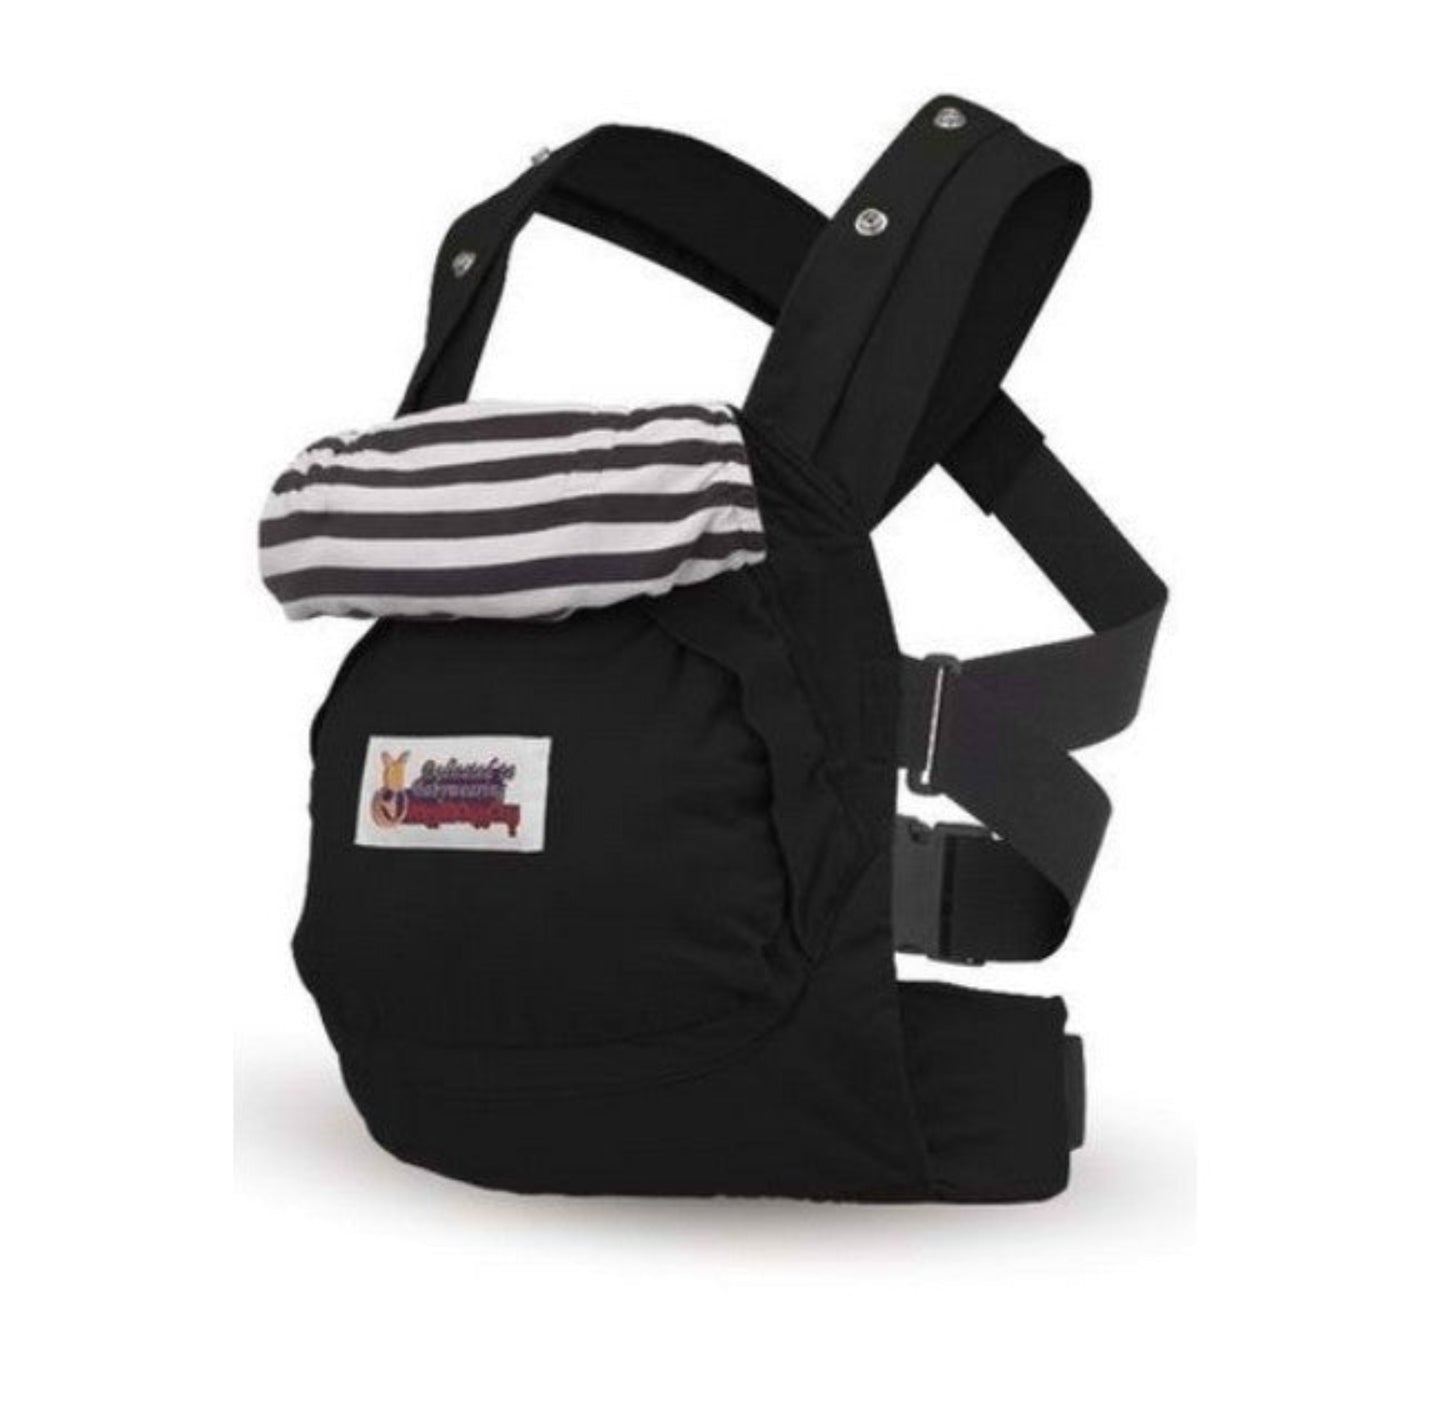 Baby sling Mamaway Hugaroo Baby Carrier - Black Mamaway 129.00